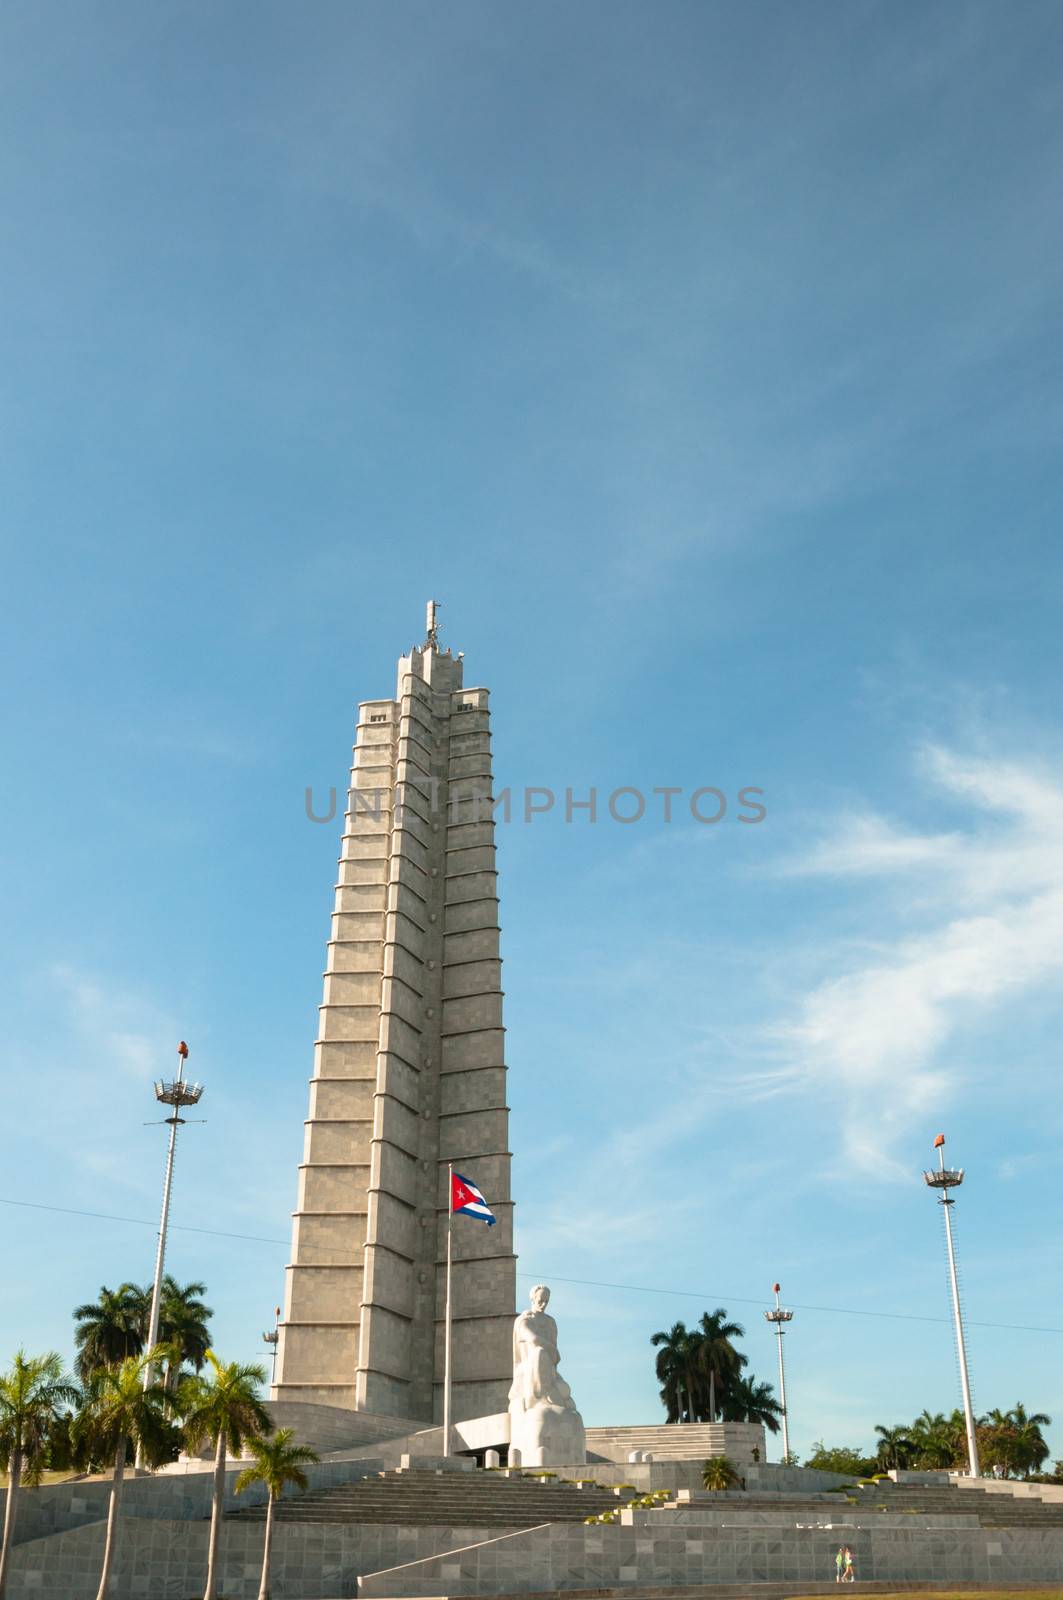 Havana Monument Cuba by weltreisendertj